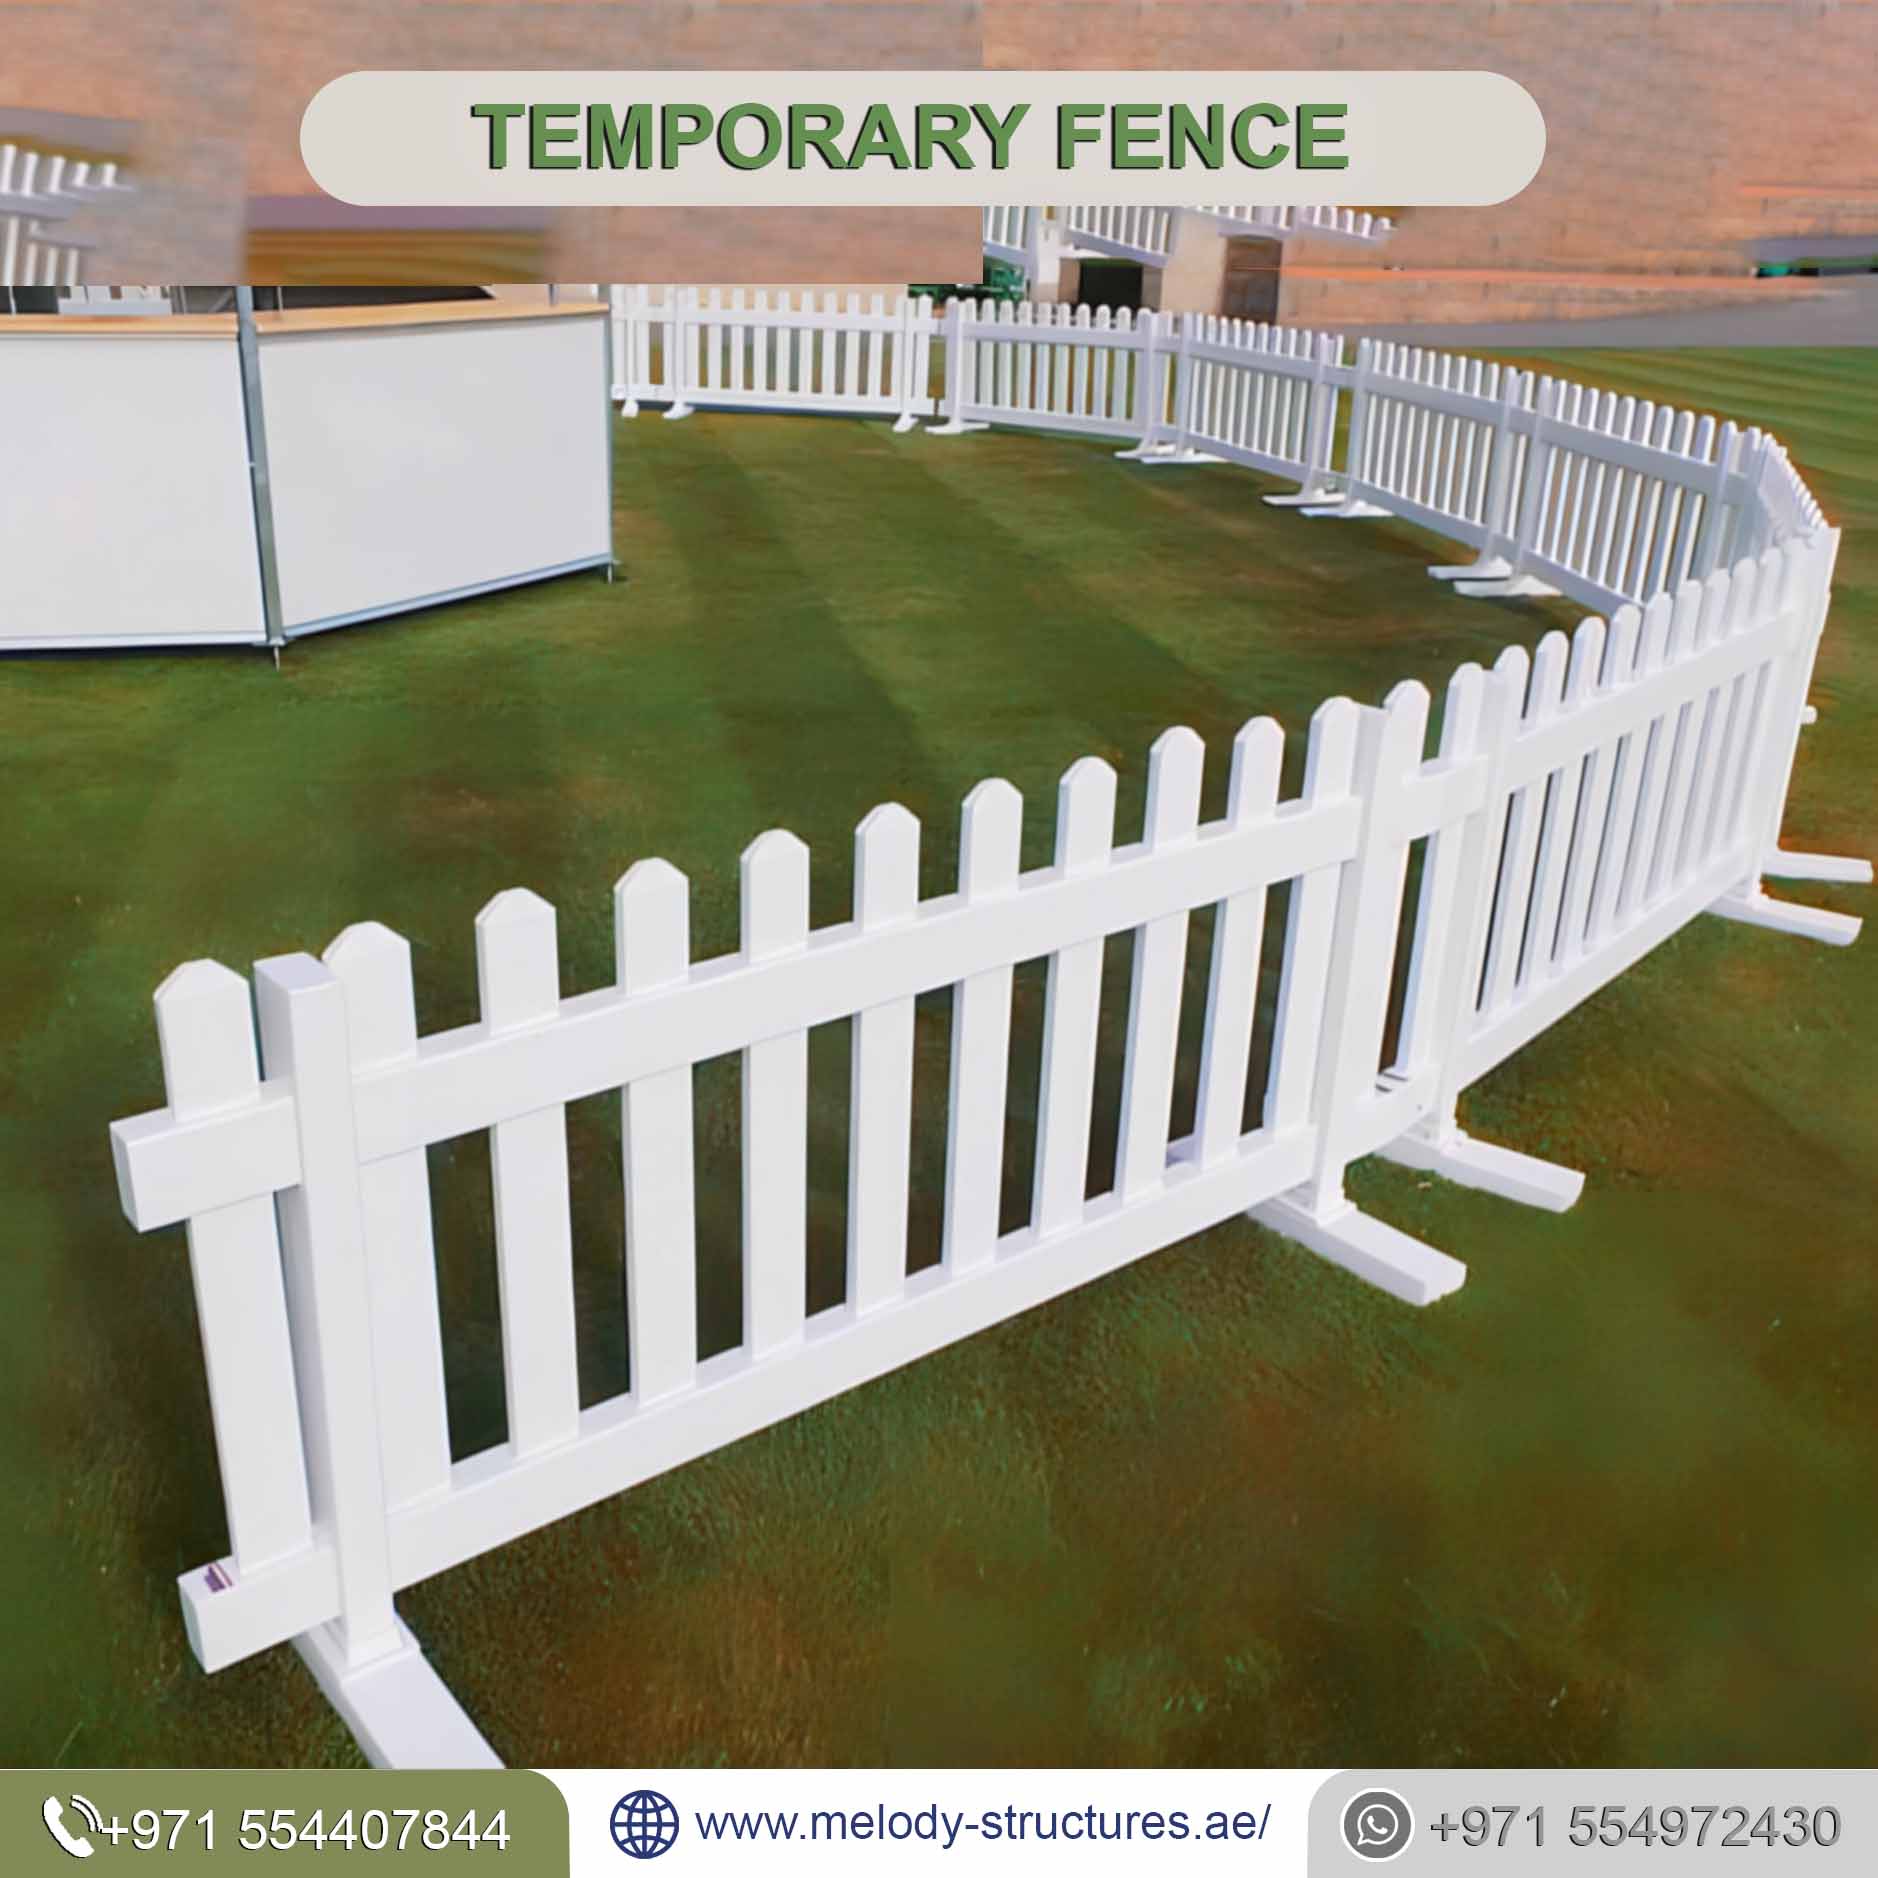 Rental Fence in UAE, Temporary Fence Service-1.jpg